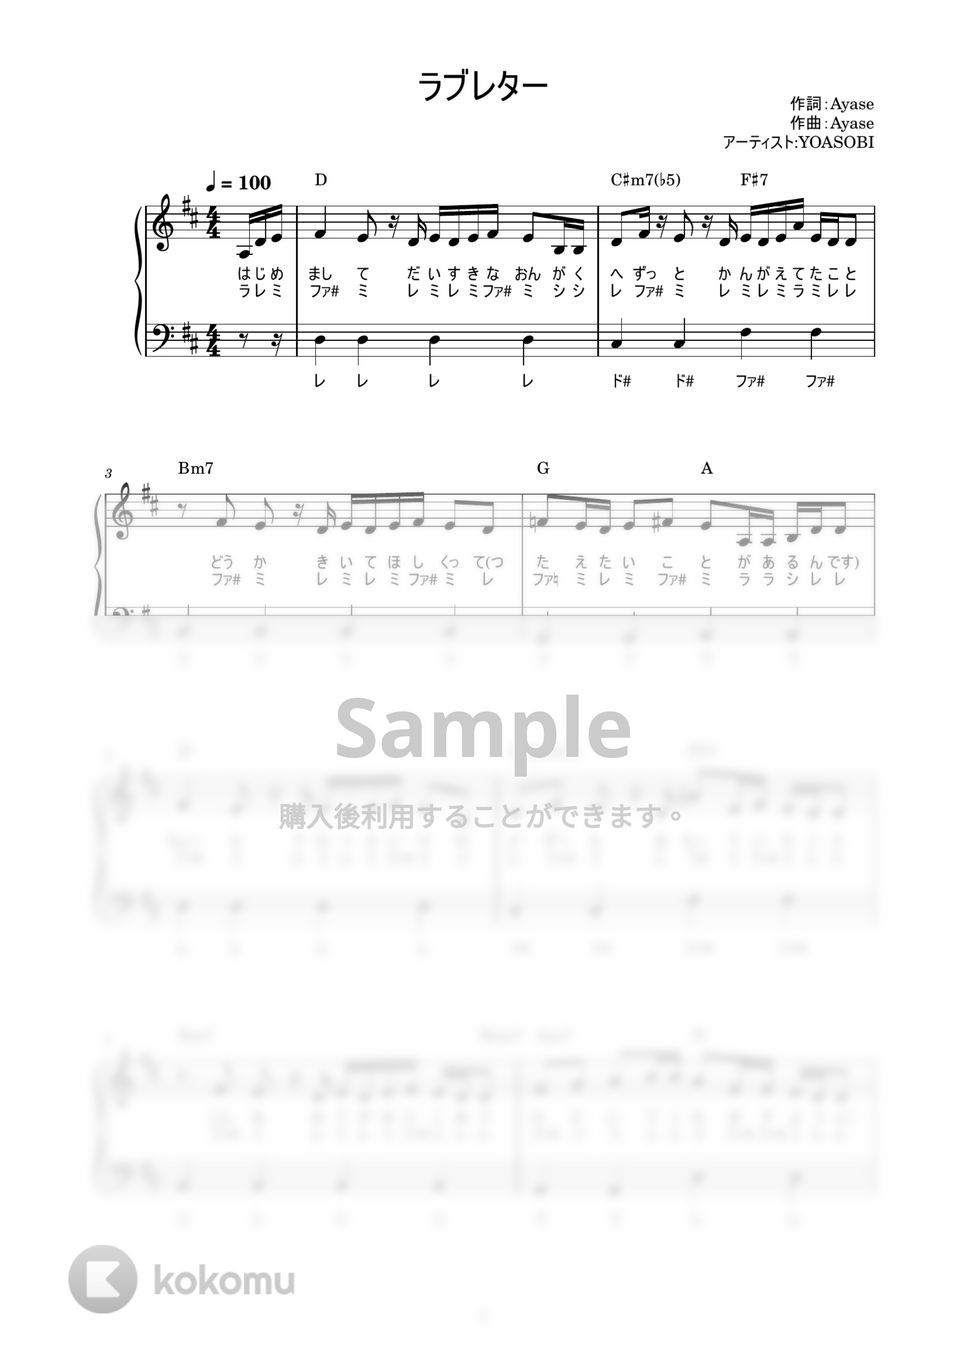 YOASOBI - ラブレター (かんたん / 歌詞付き / ドレミ付き / 初心者) by piano.tokyo